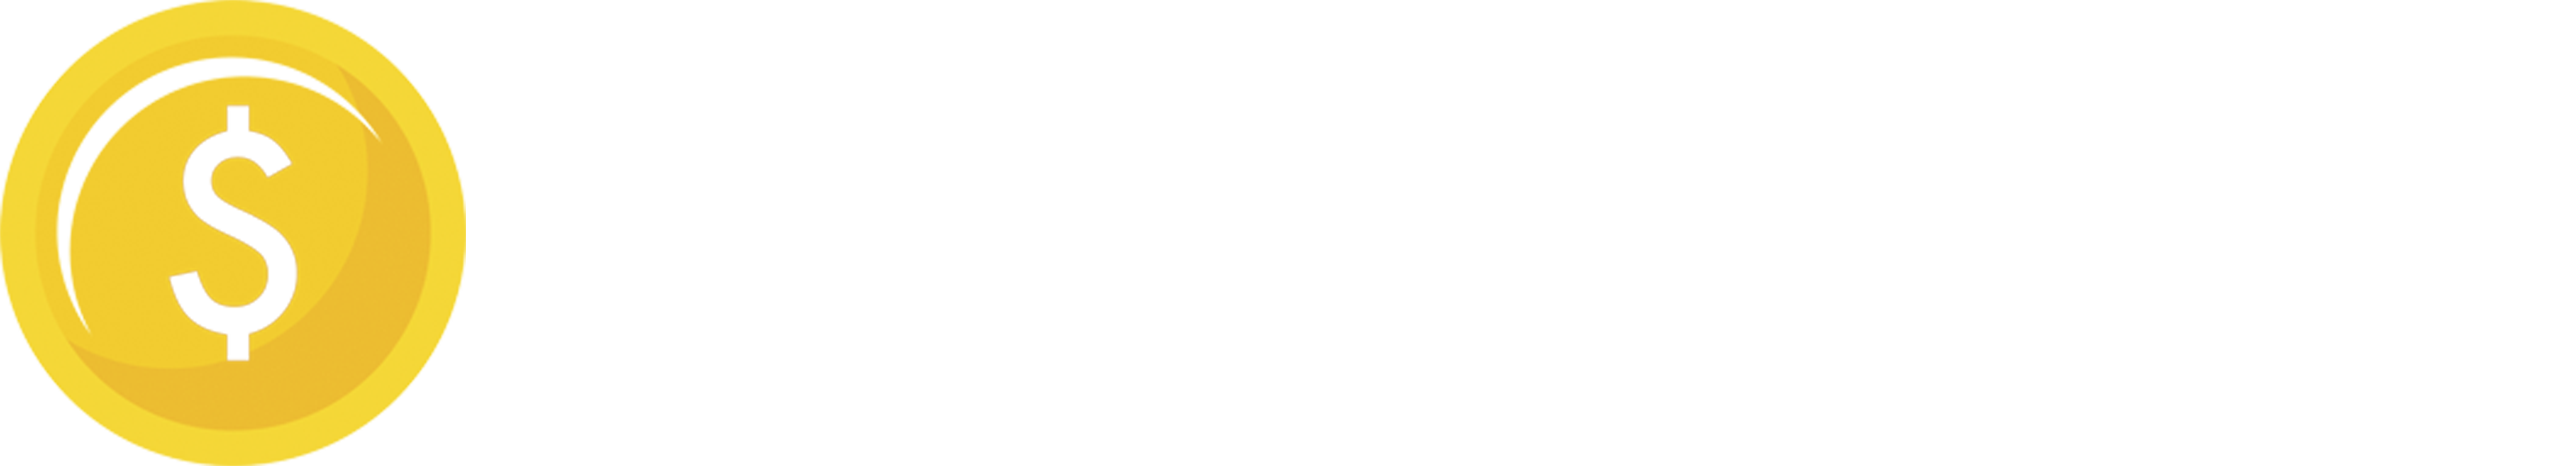 JustEntrepreneurship.com